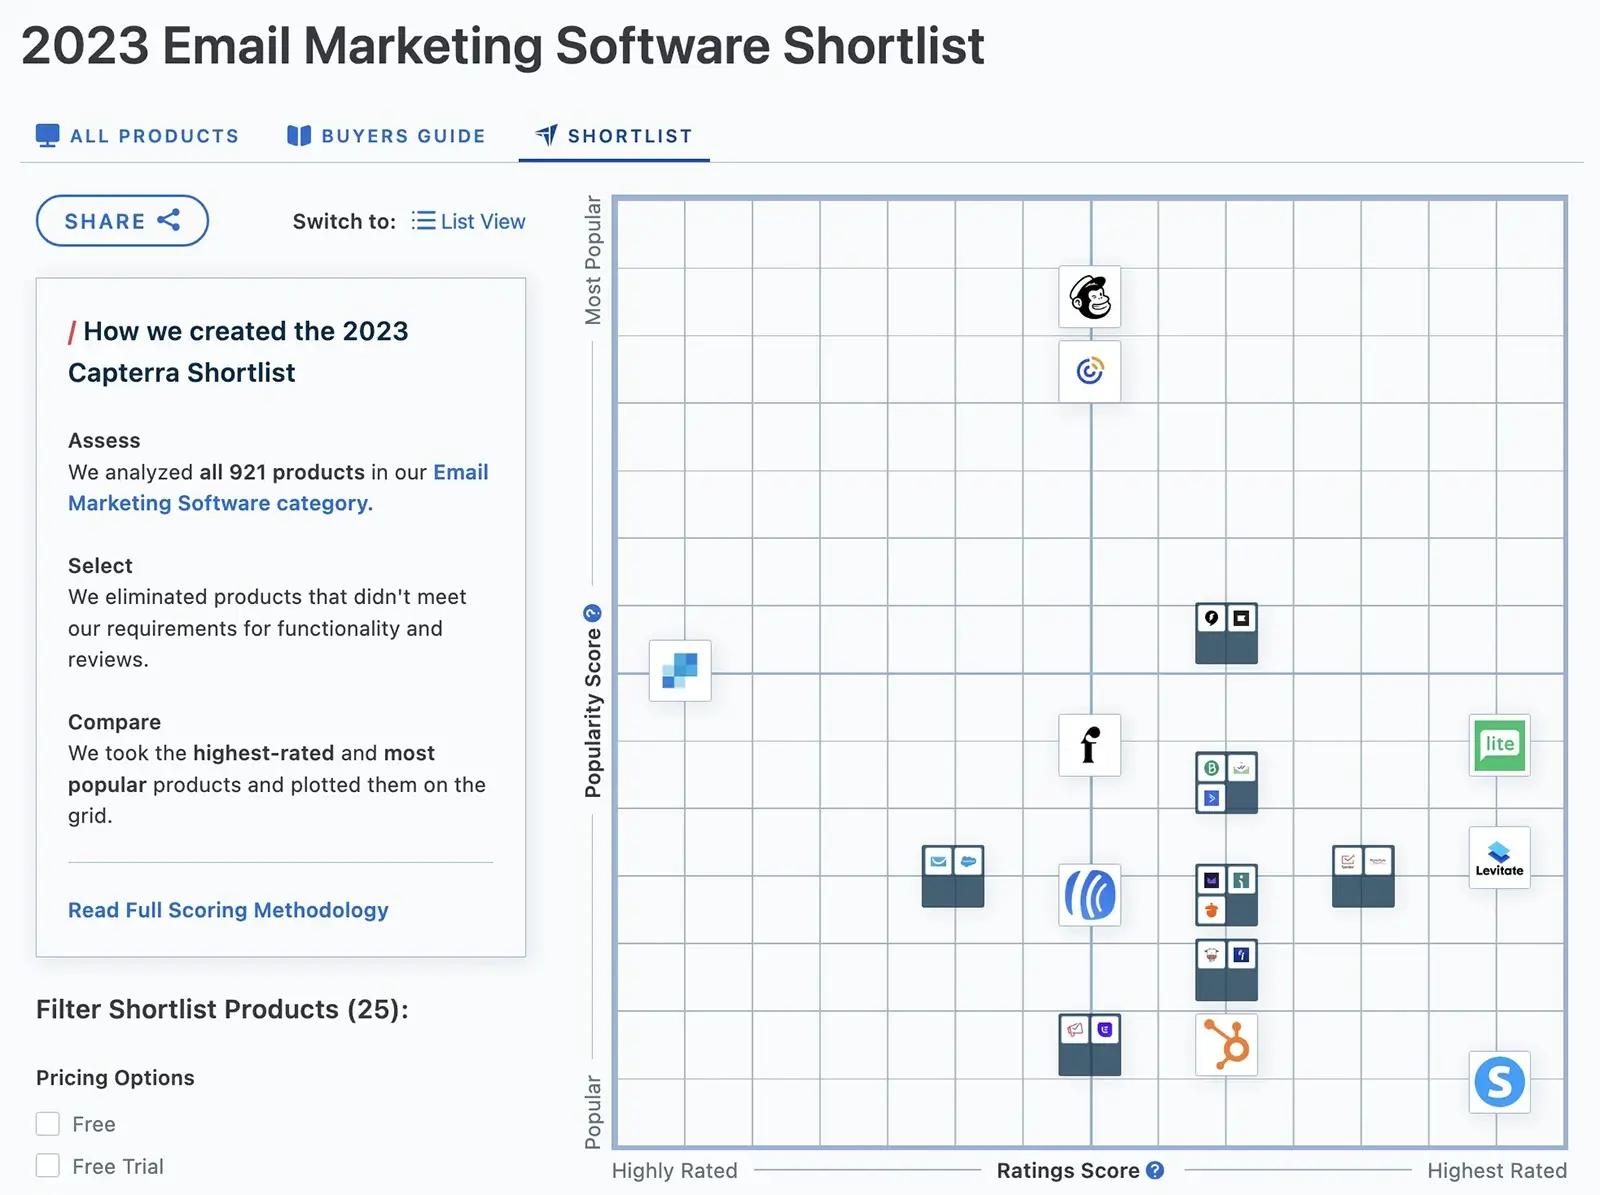 2023 Email Marketing Software Shortlist image